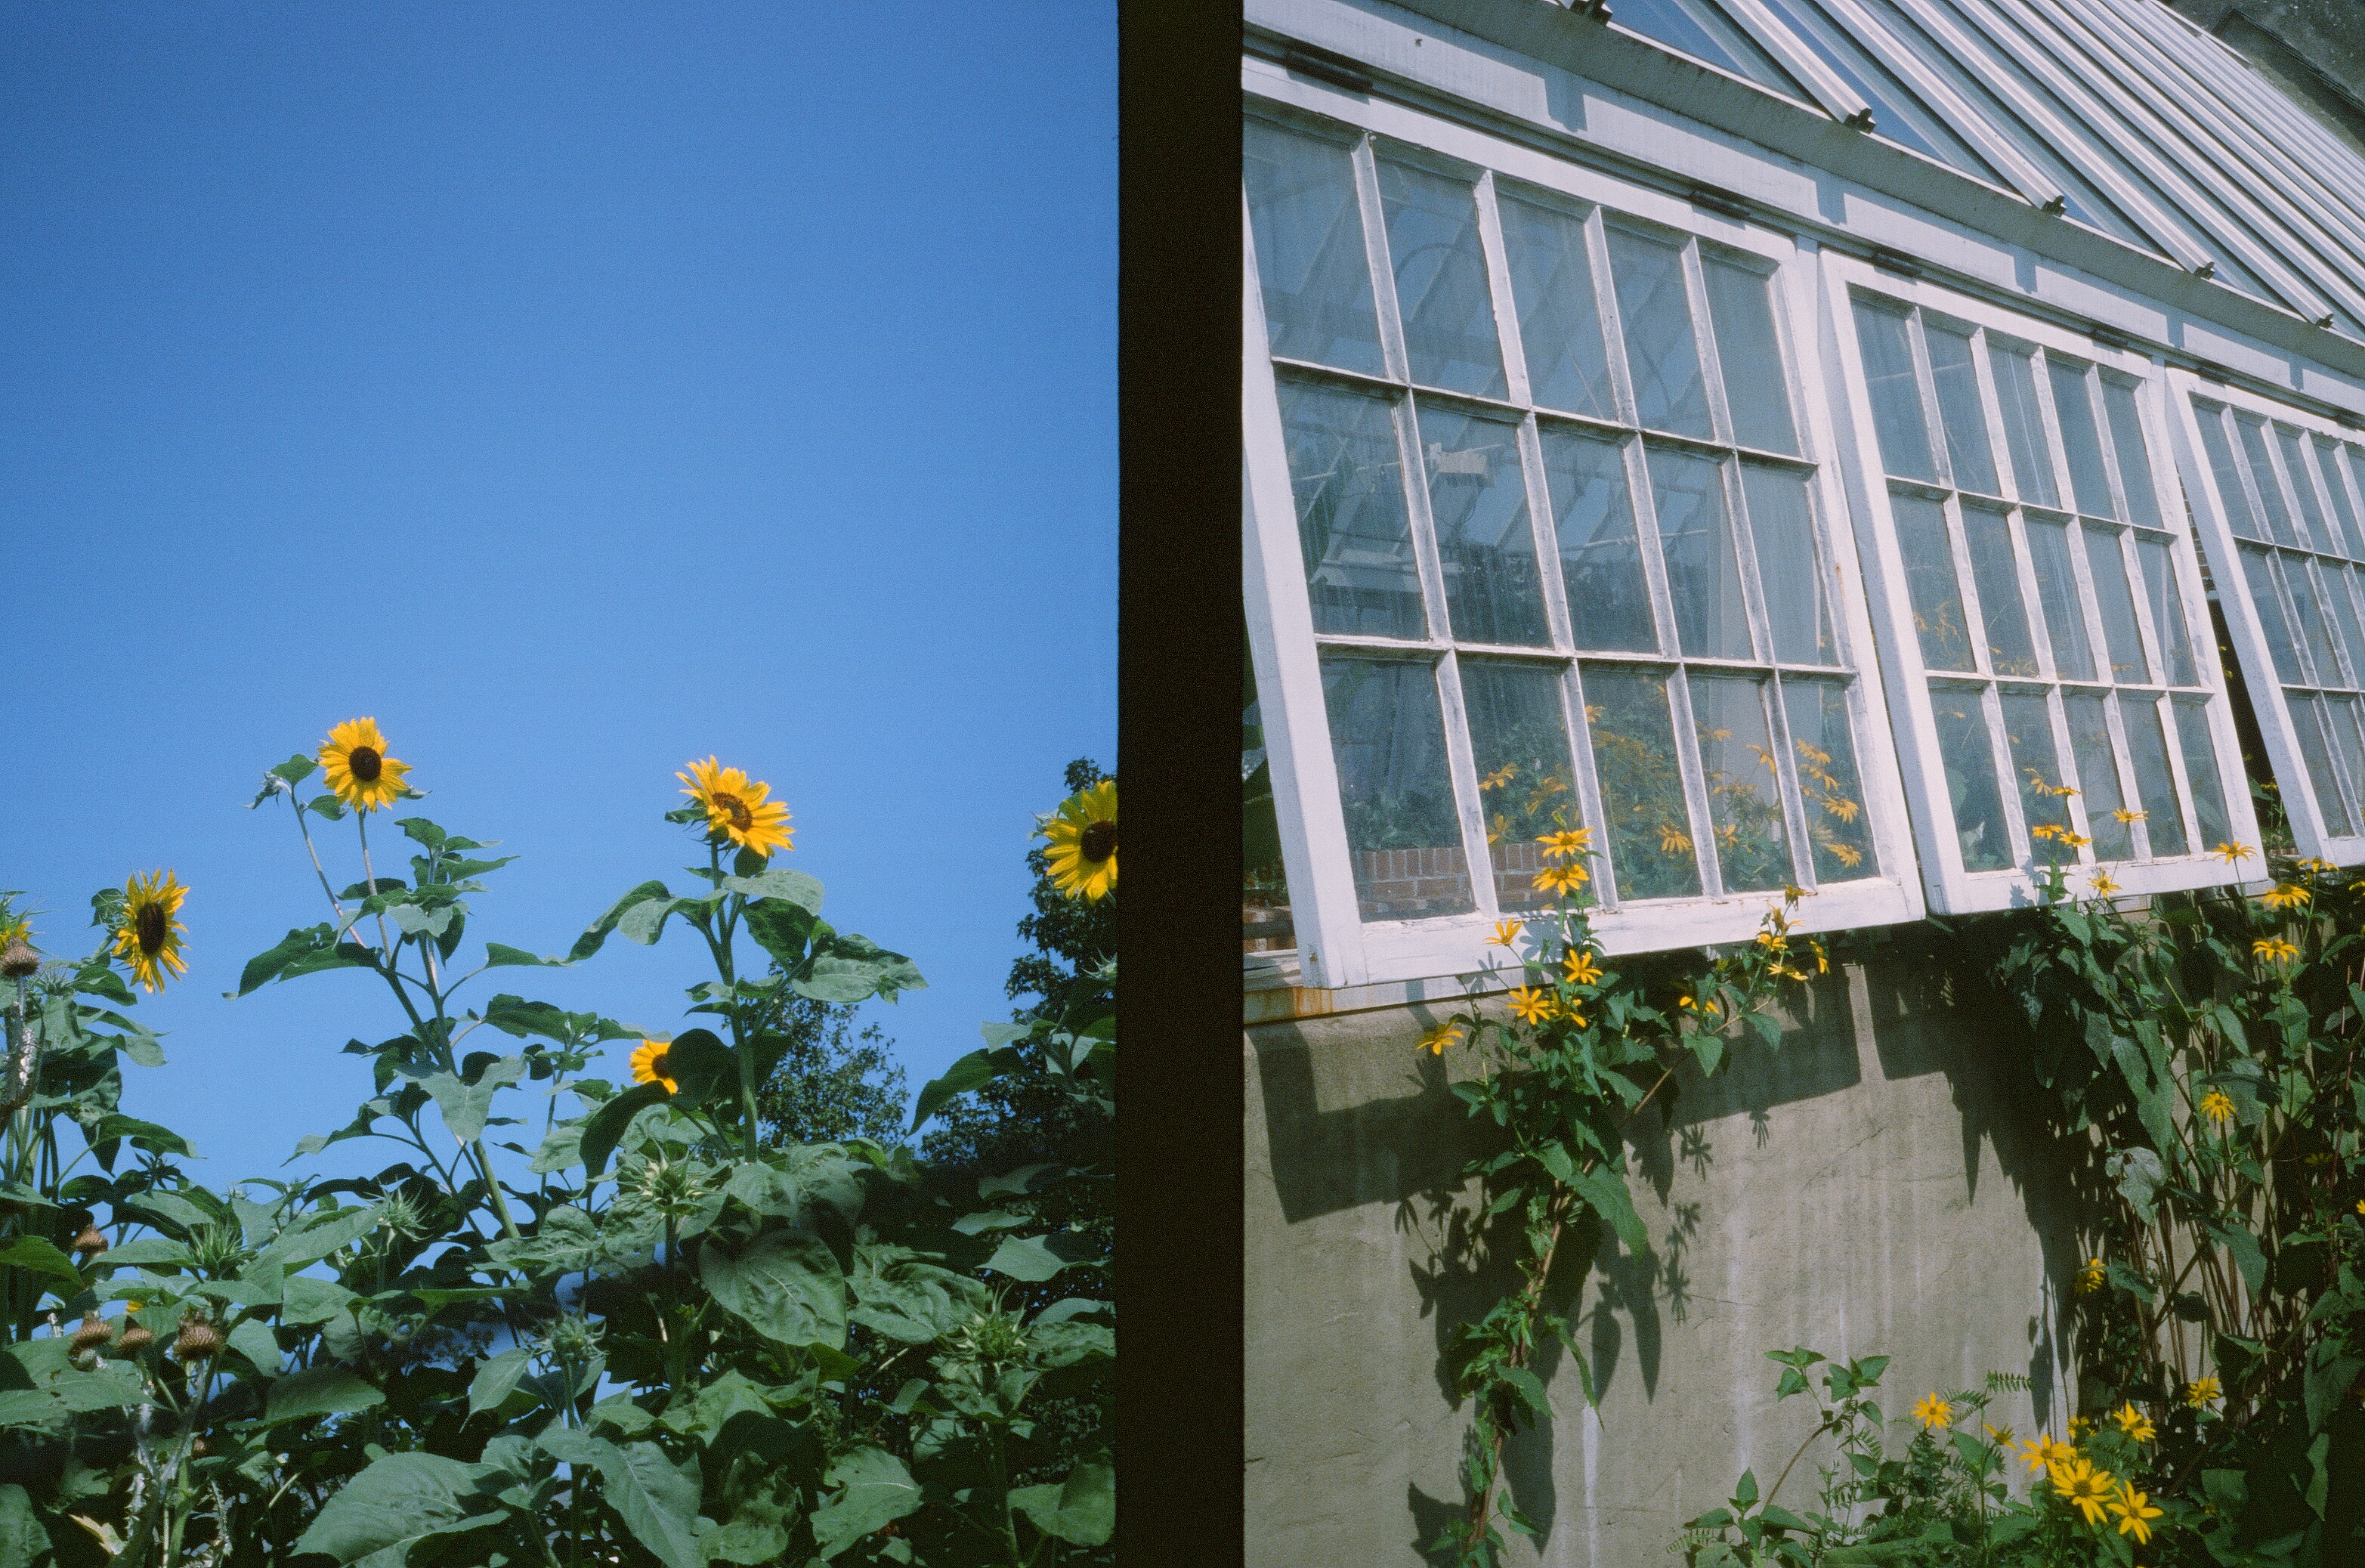 sunflowers grow into a blue sky and through open windows